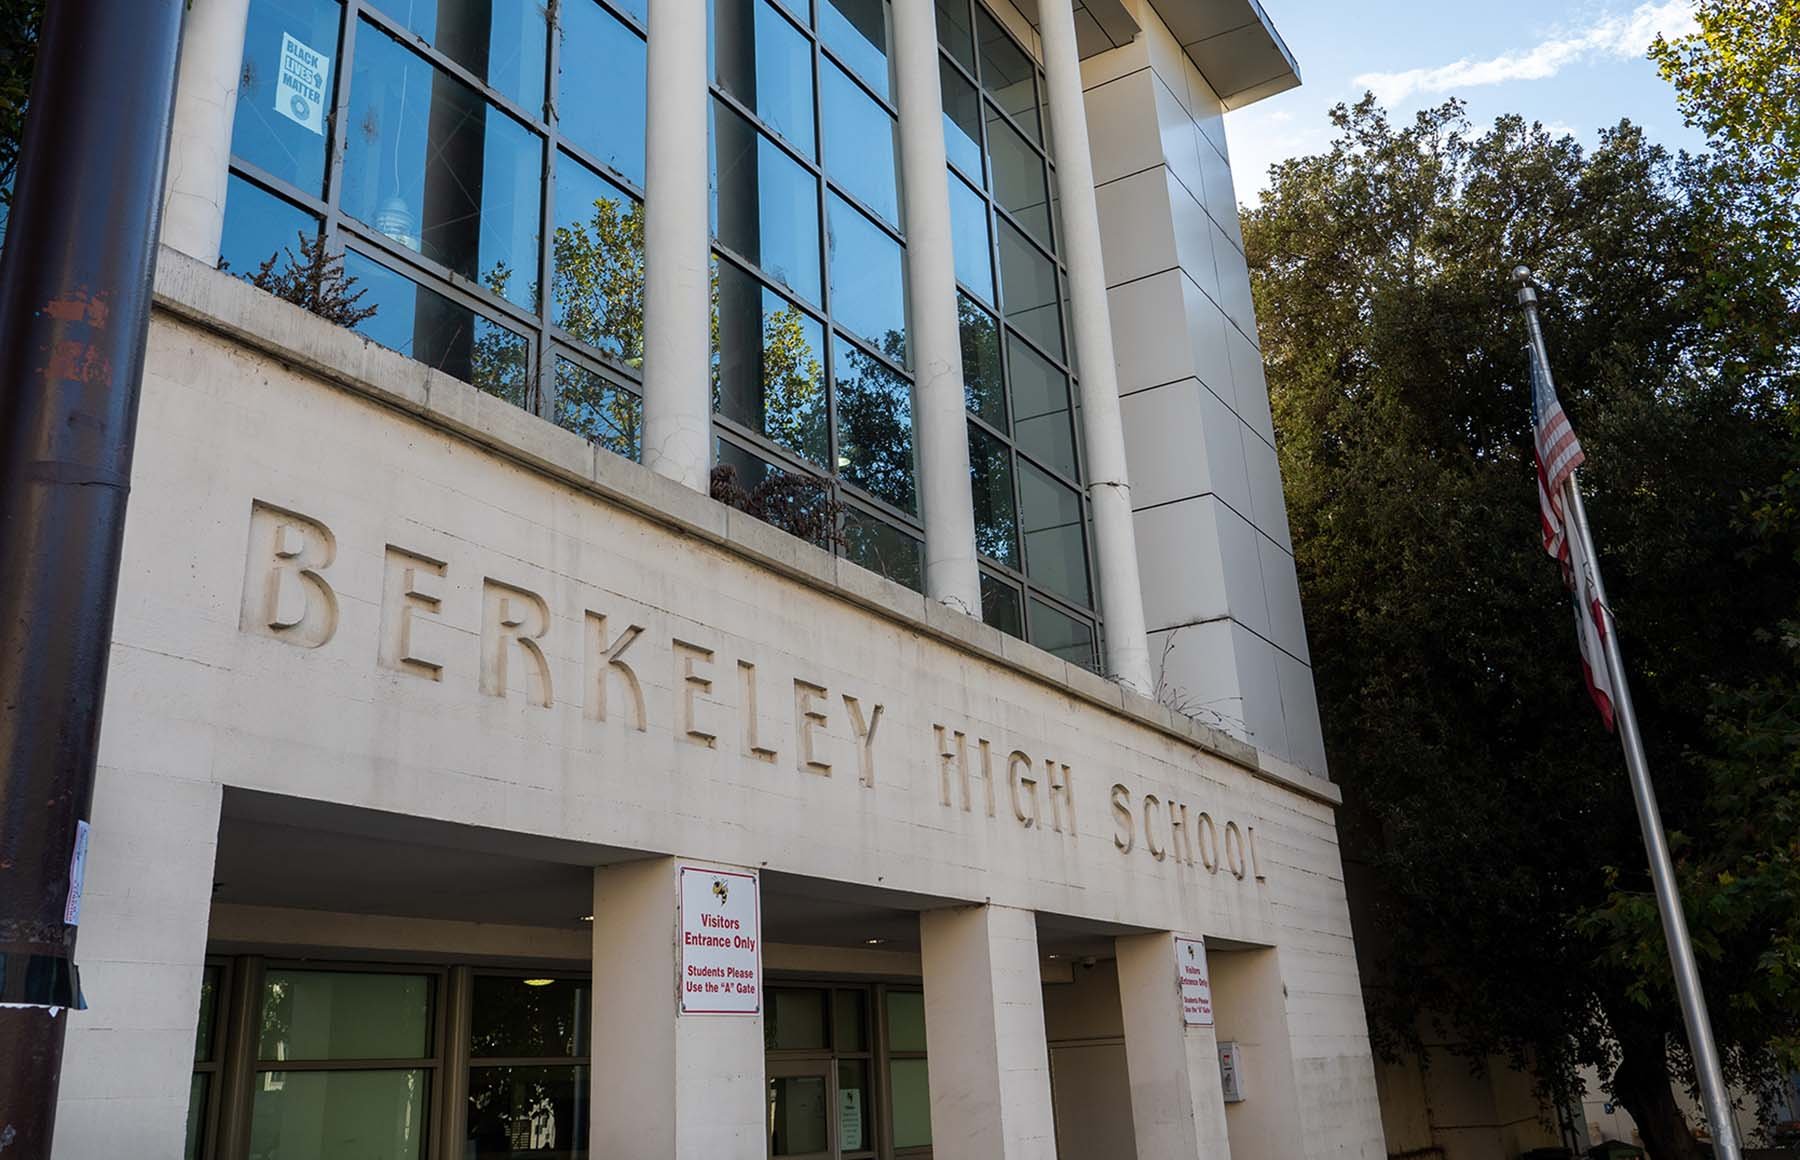 Berkeley school board talks consent education, block scheduling for fall